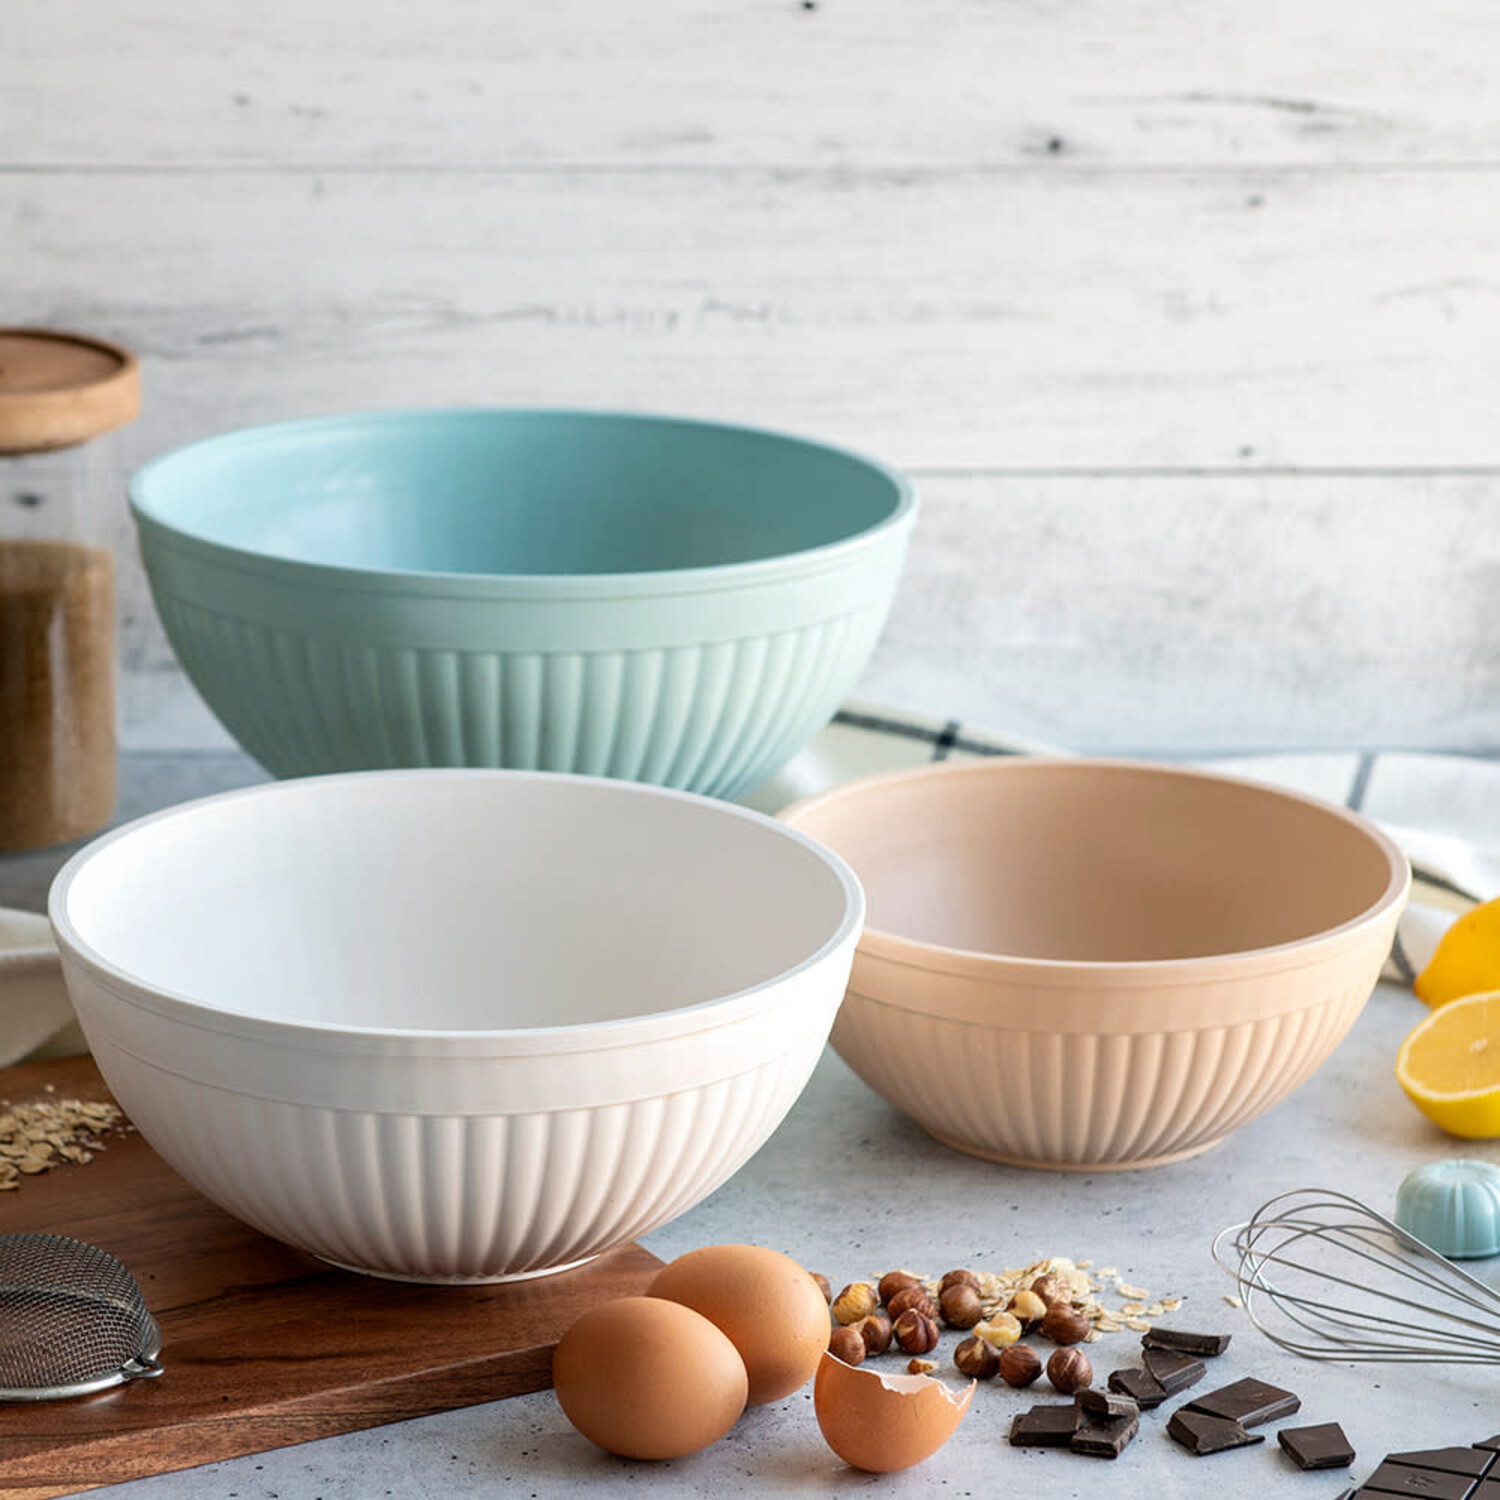 https://cdn.shoplightspeed.com/shops/633447/files/55181788/1500x4000x3/nordic-ware-taupe-turquoise-white-mixing-bowls-set.jpg